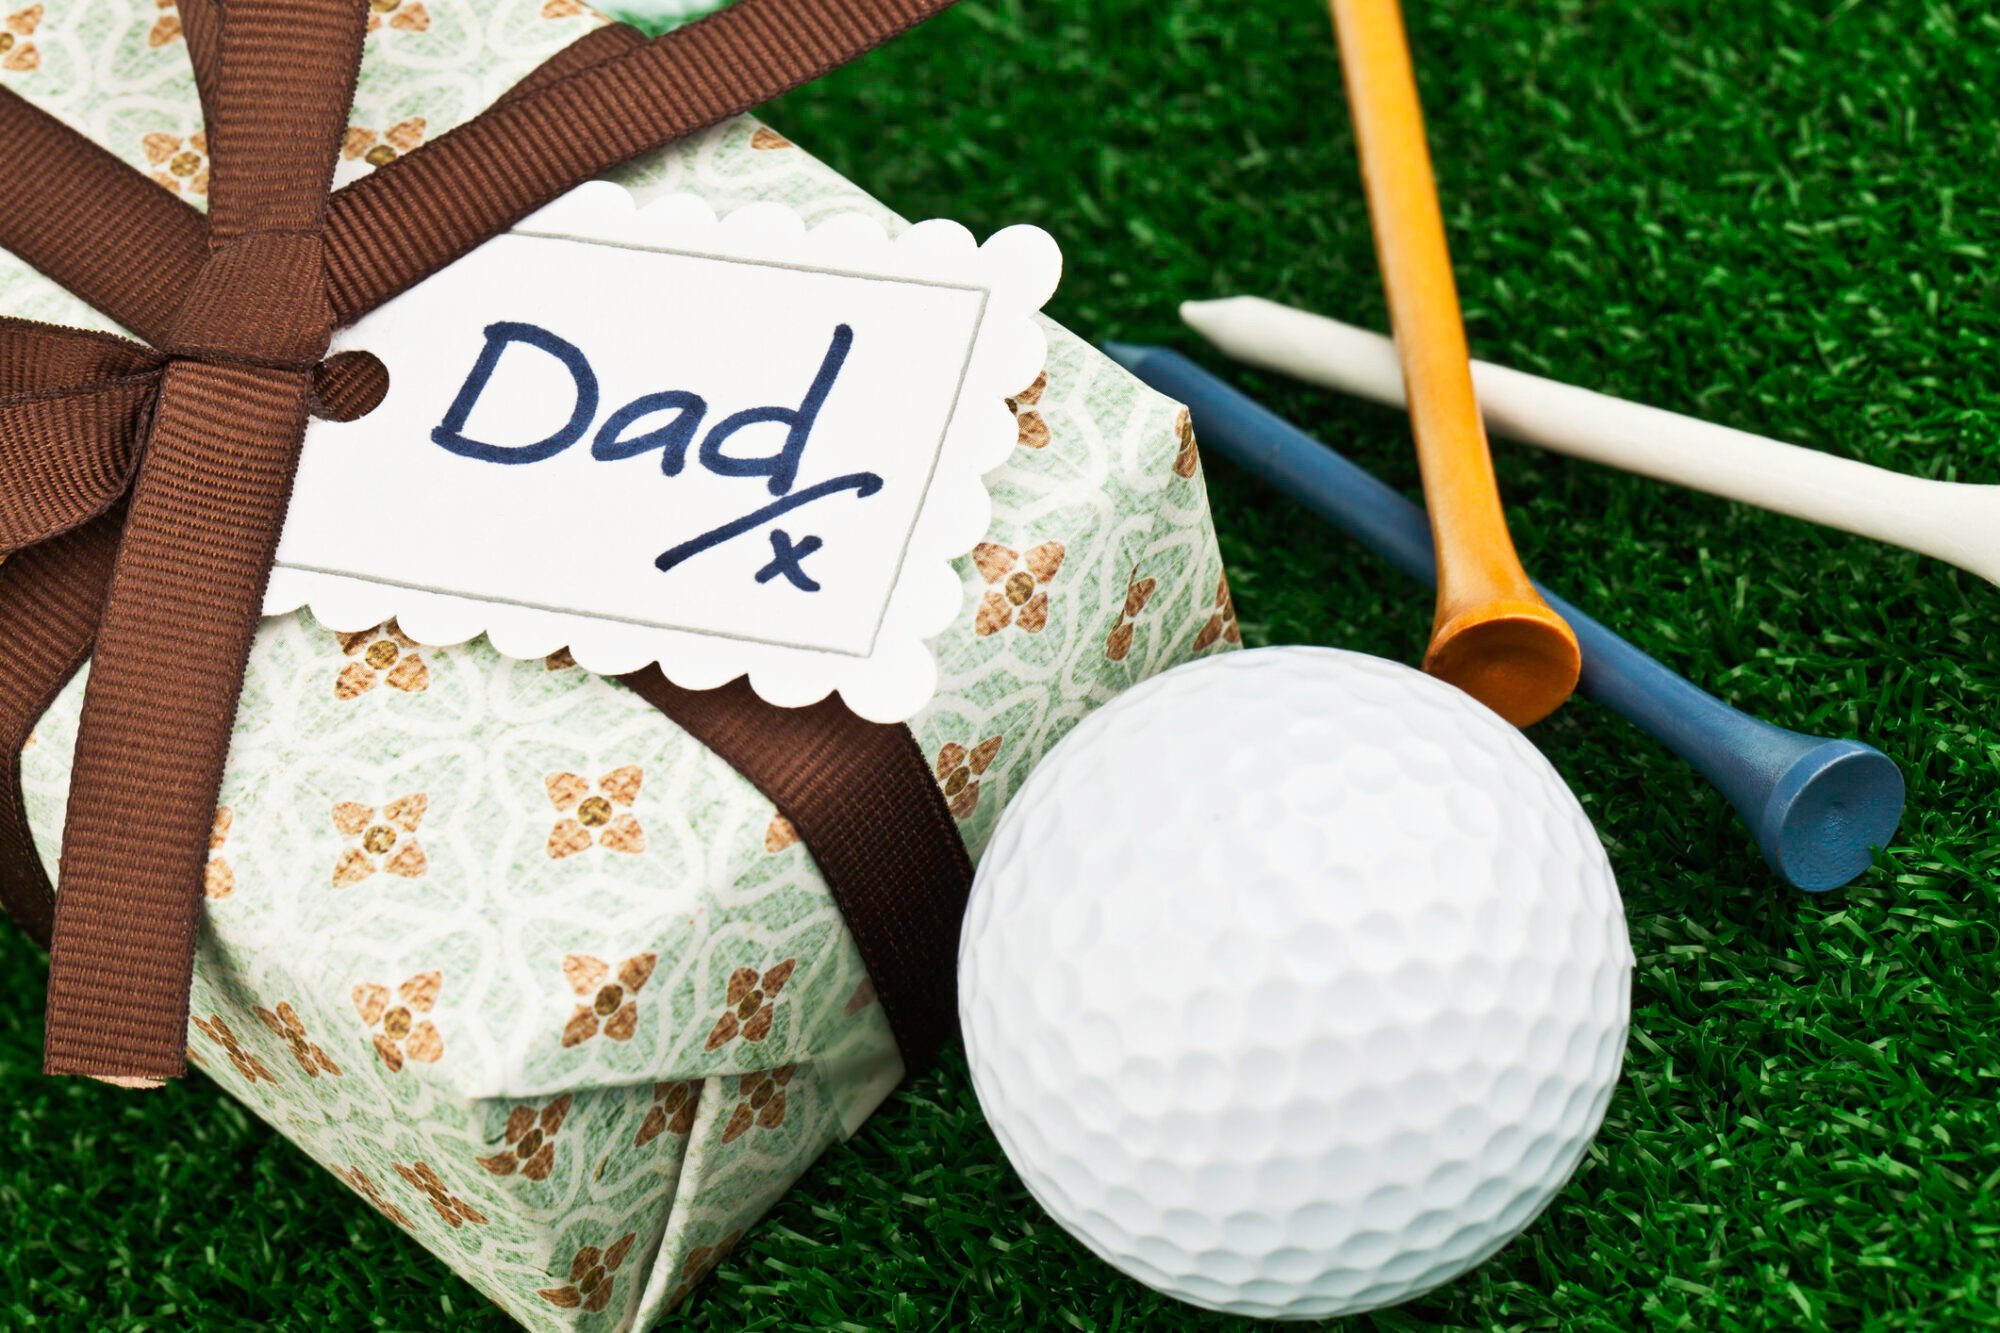 Best Dad by Par Golf Balls, Father's Day Gift idea for golfer, Golf Balls  for Dad, Grandpa, fun Golf Ball gifts, Golf Gifts for Dad